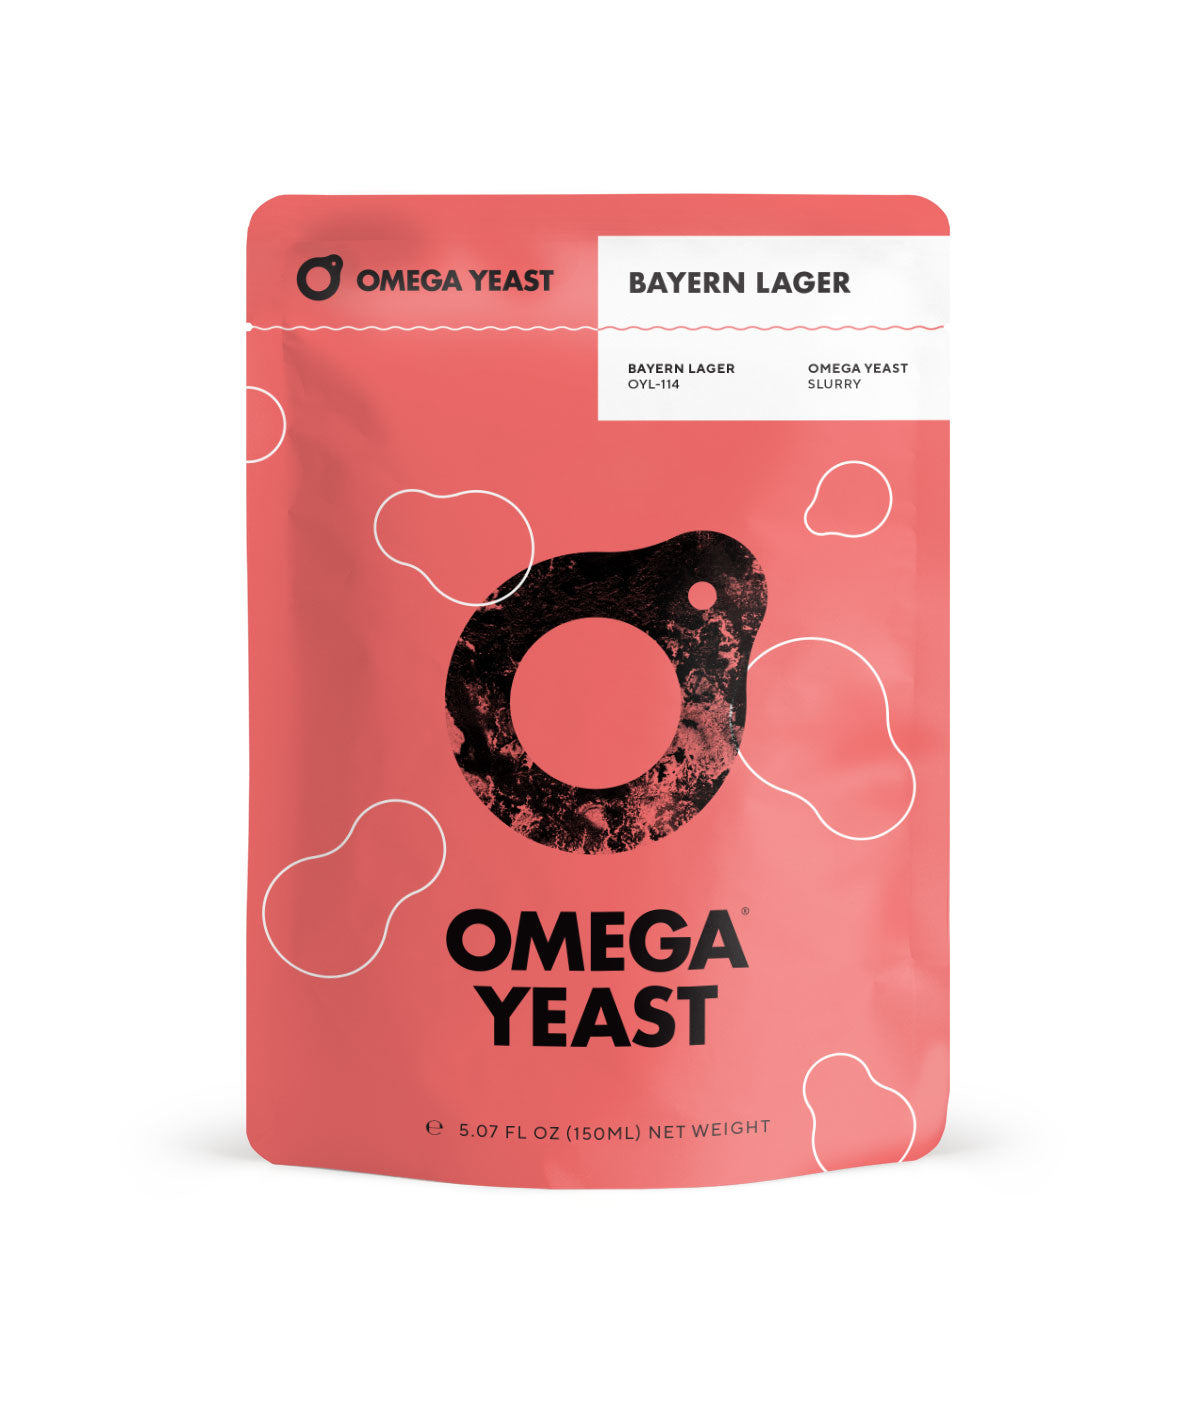 Bayern Lager Yeast by Omega Yeast OYL-114